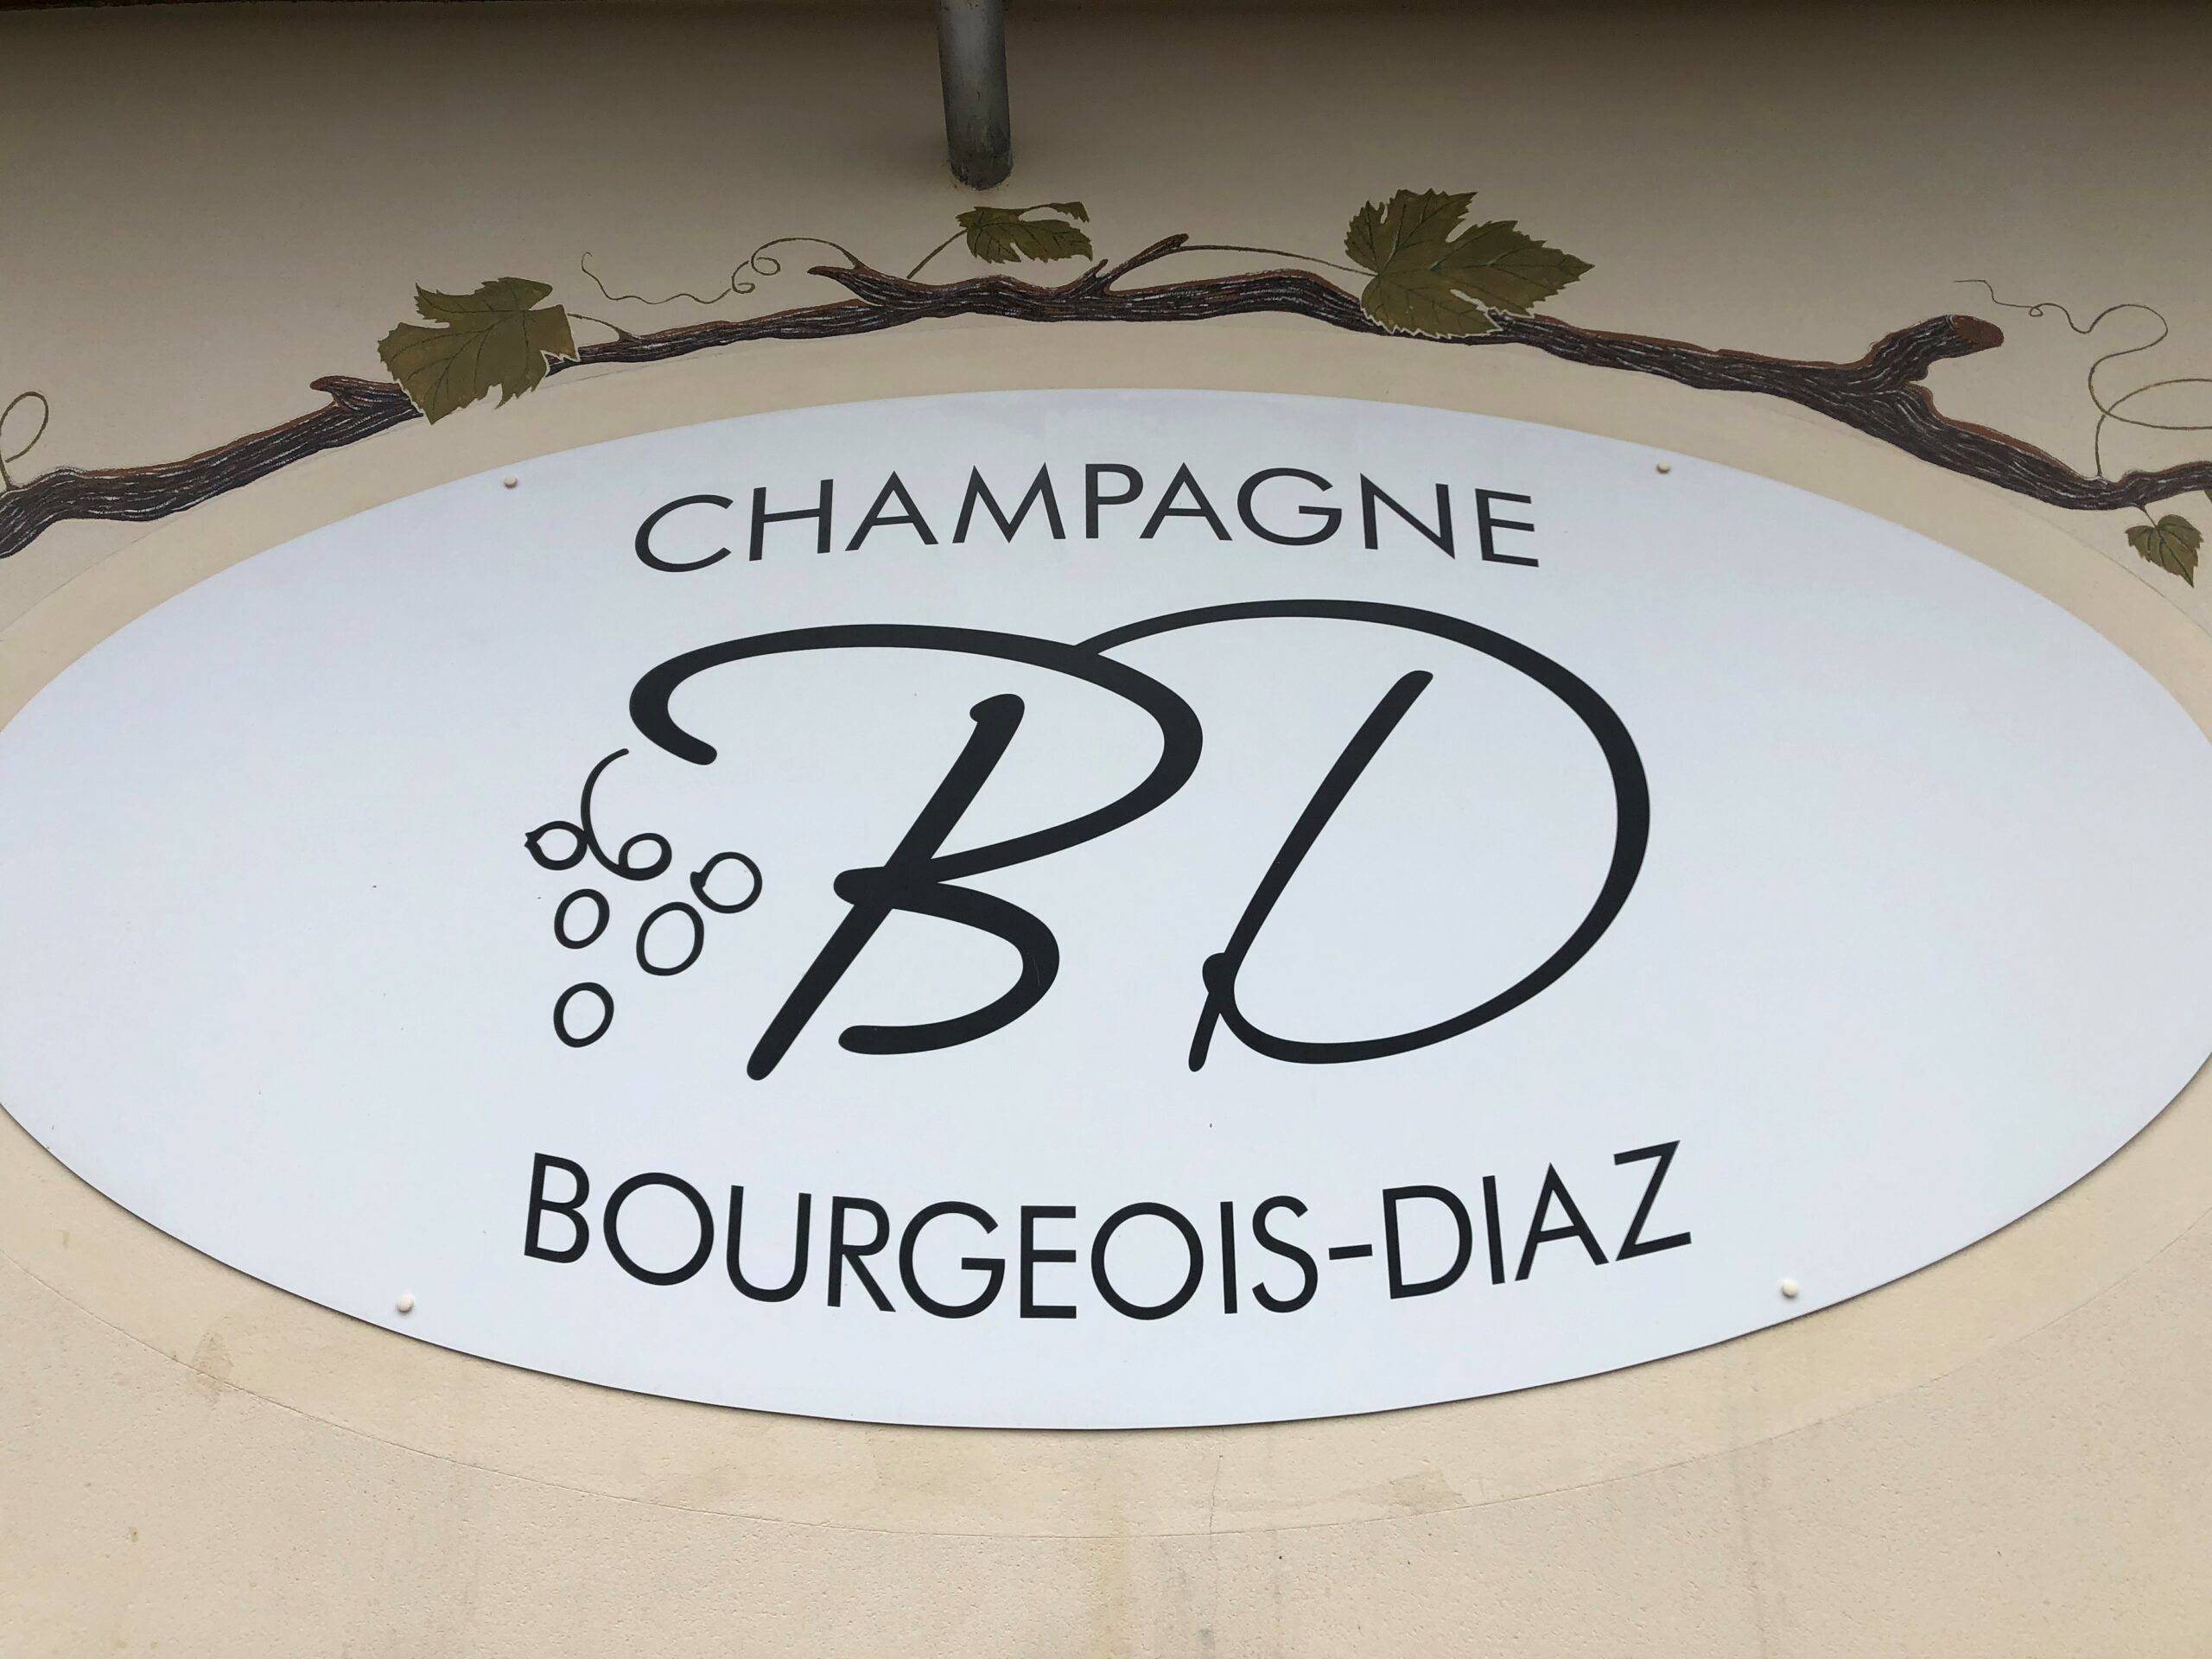 Champagne Bourgeois-Diaz